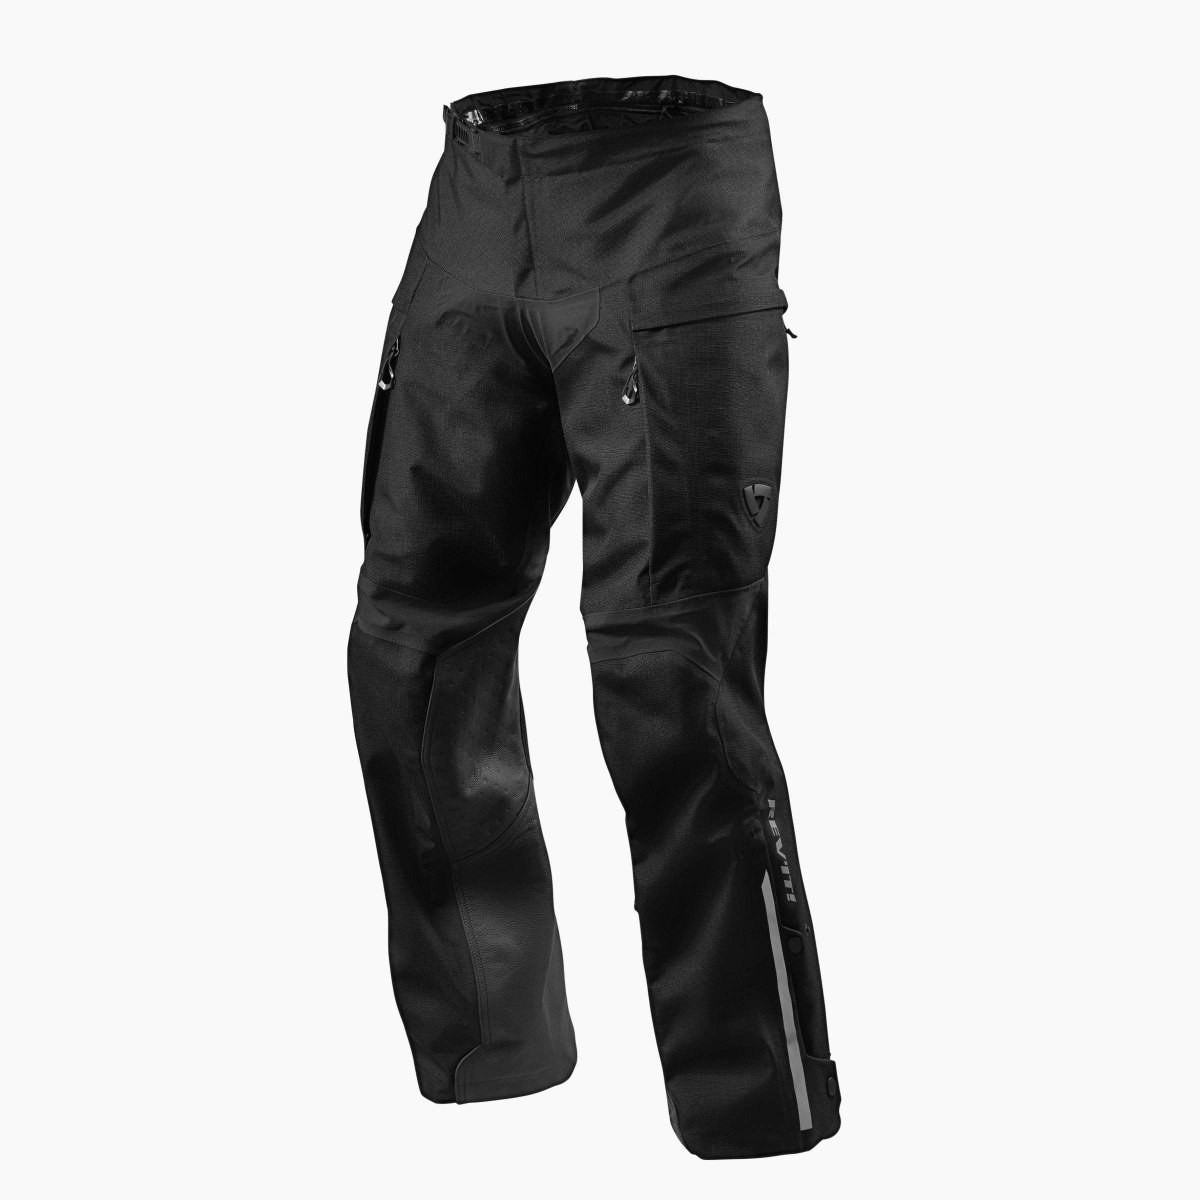 Image of REV'IT! Component H2O Standard Black Motorcycle Pants Size 2XL EN